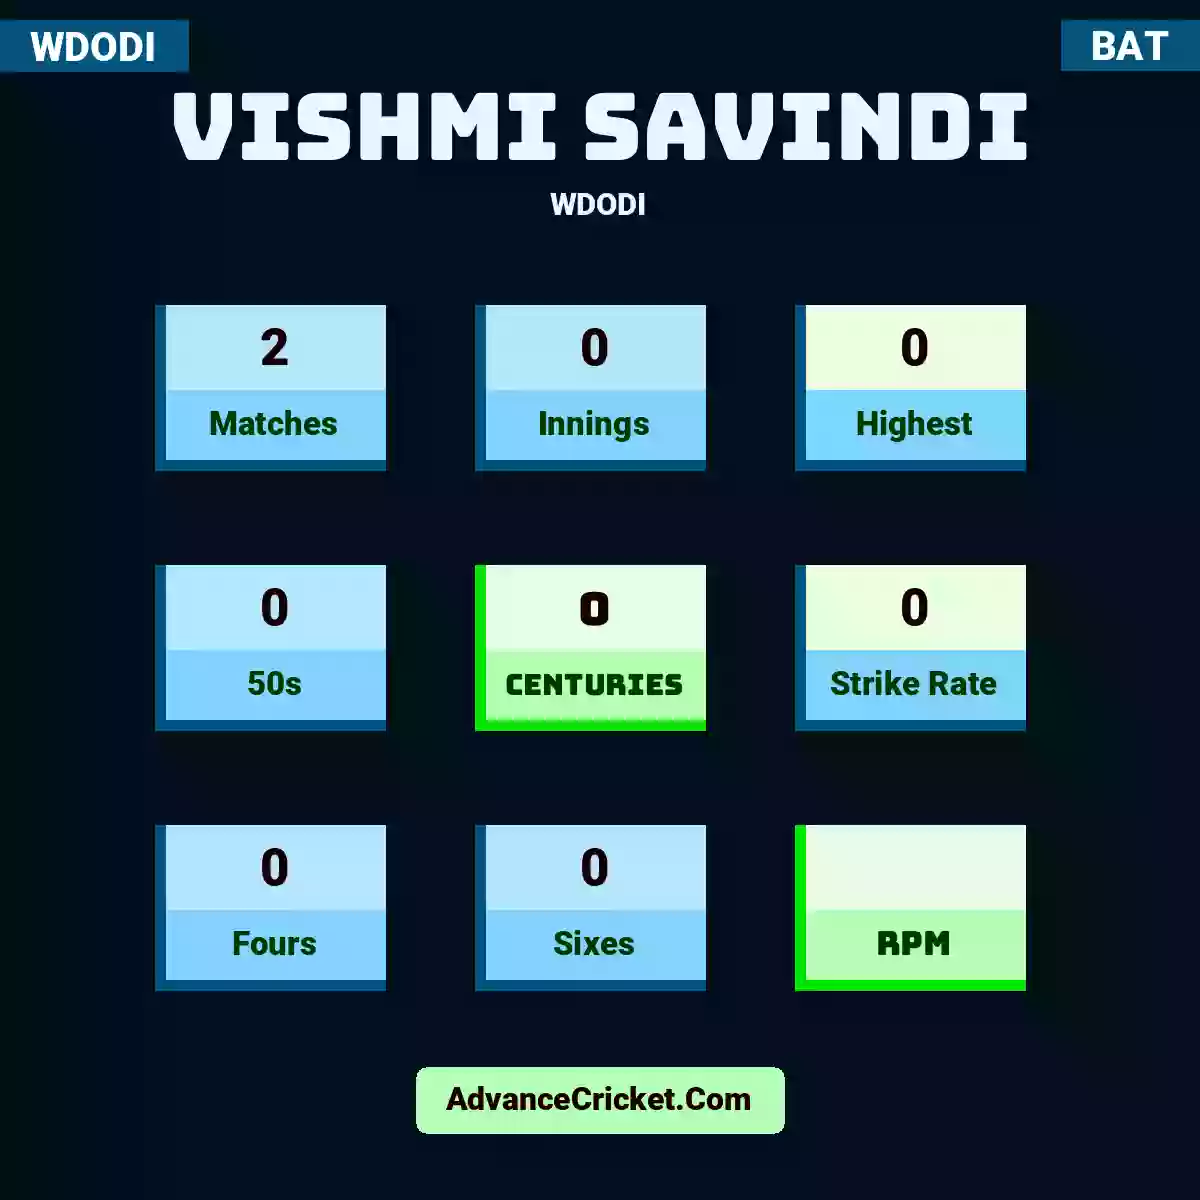 Vishmi Savindi WDODI , Vishmi Savindi played 2 matches, scored 0 runs as highest, 0 half-centuries, and 0 centuries, with a strike rate of 0. V.Savindi hit 0 fours and 0 sixes.